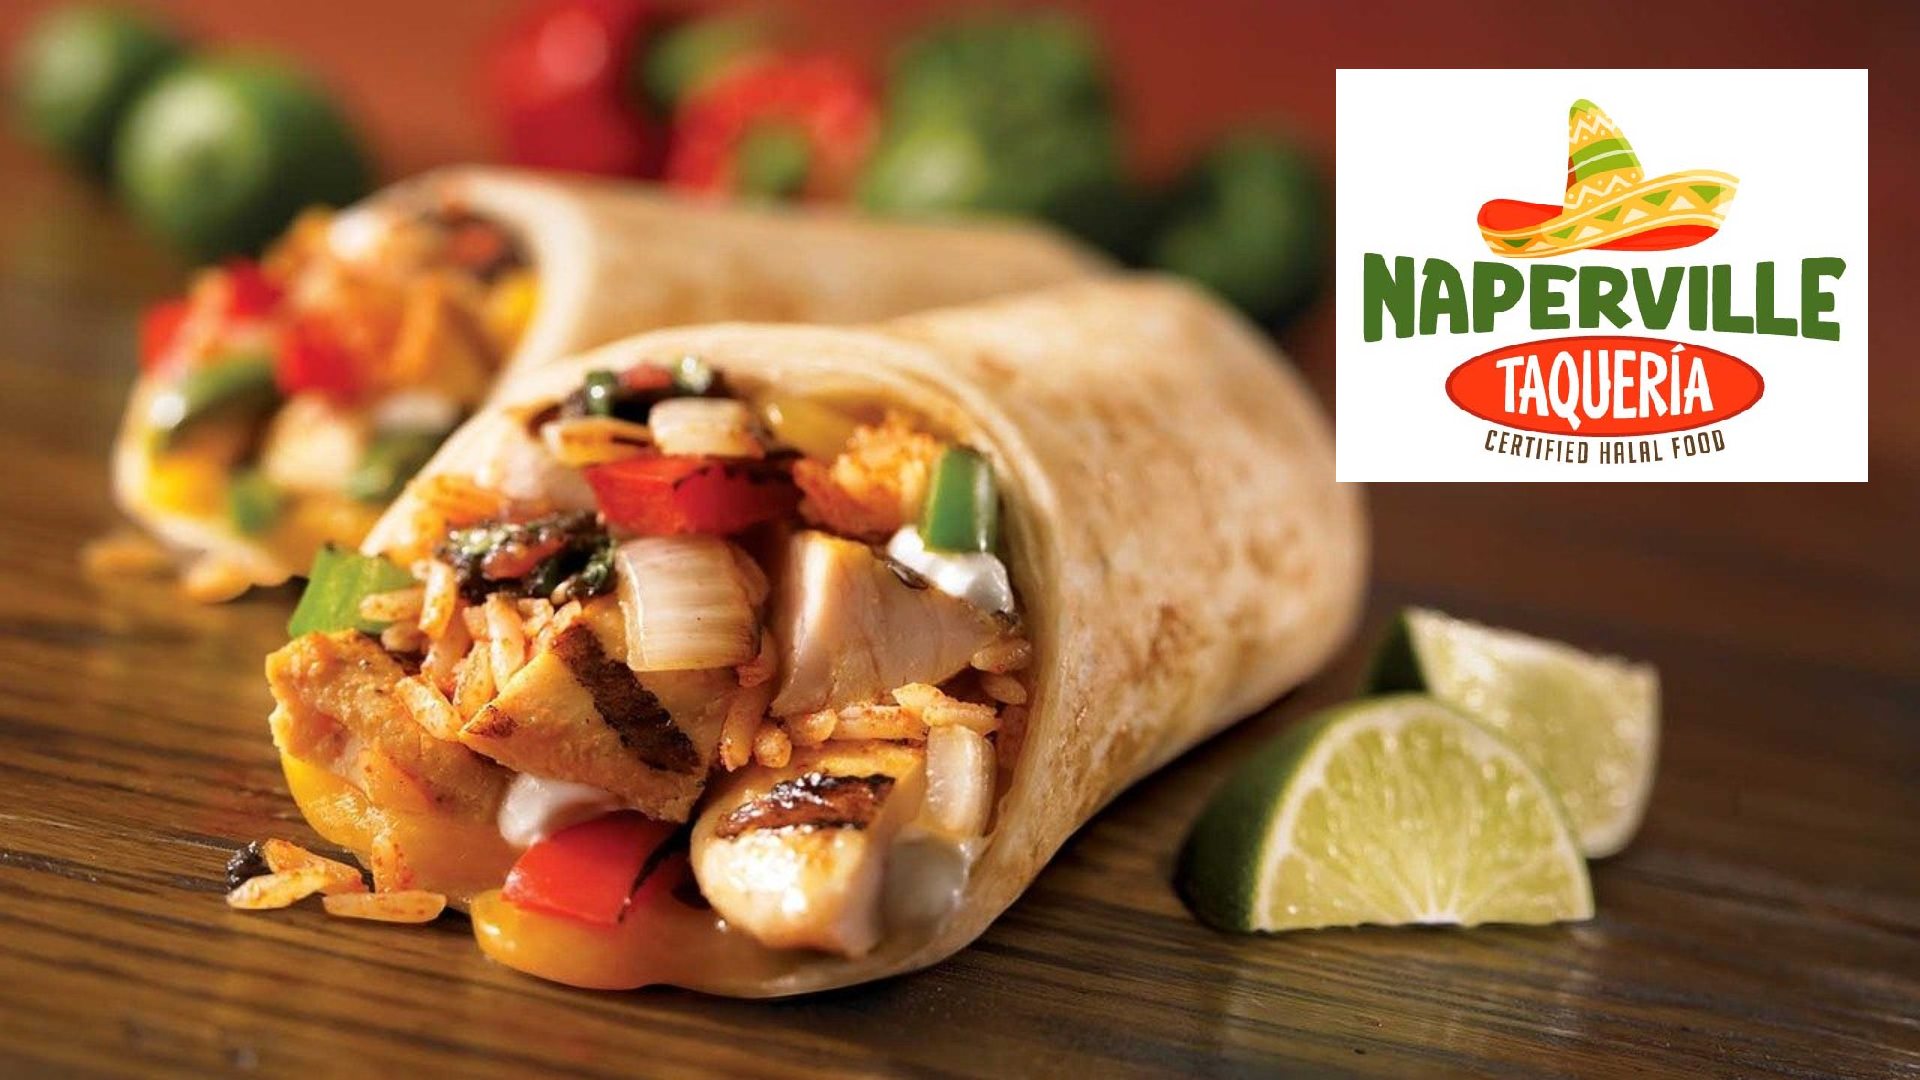 Discover the Best Burritos in Naperville at Naperville Taqueria